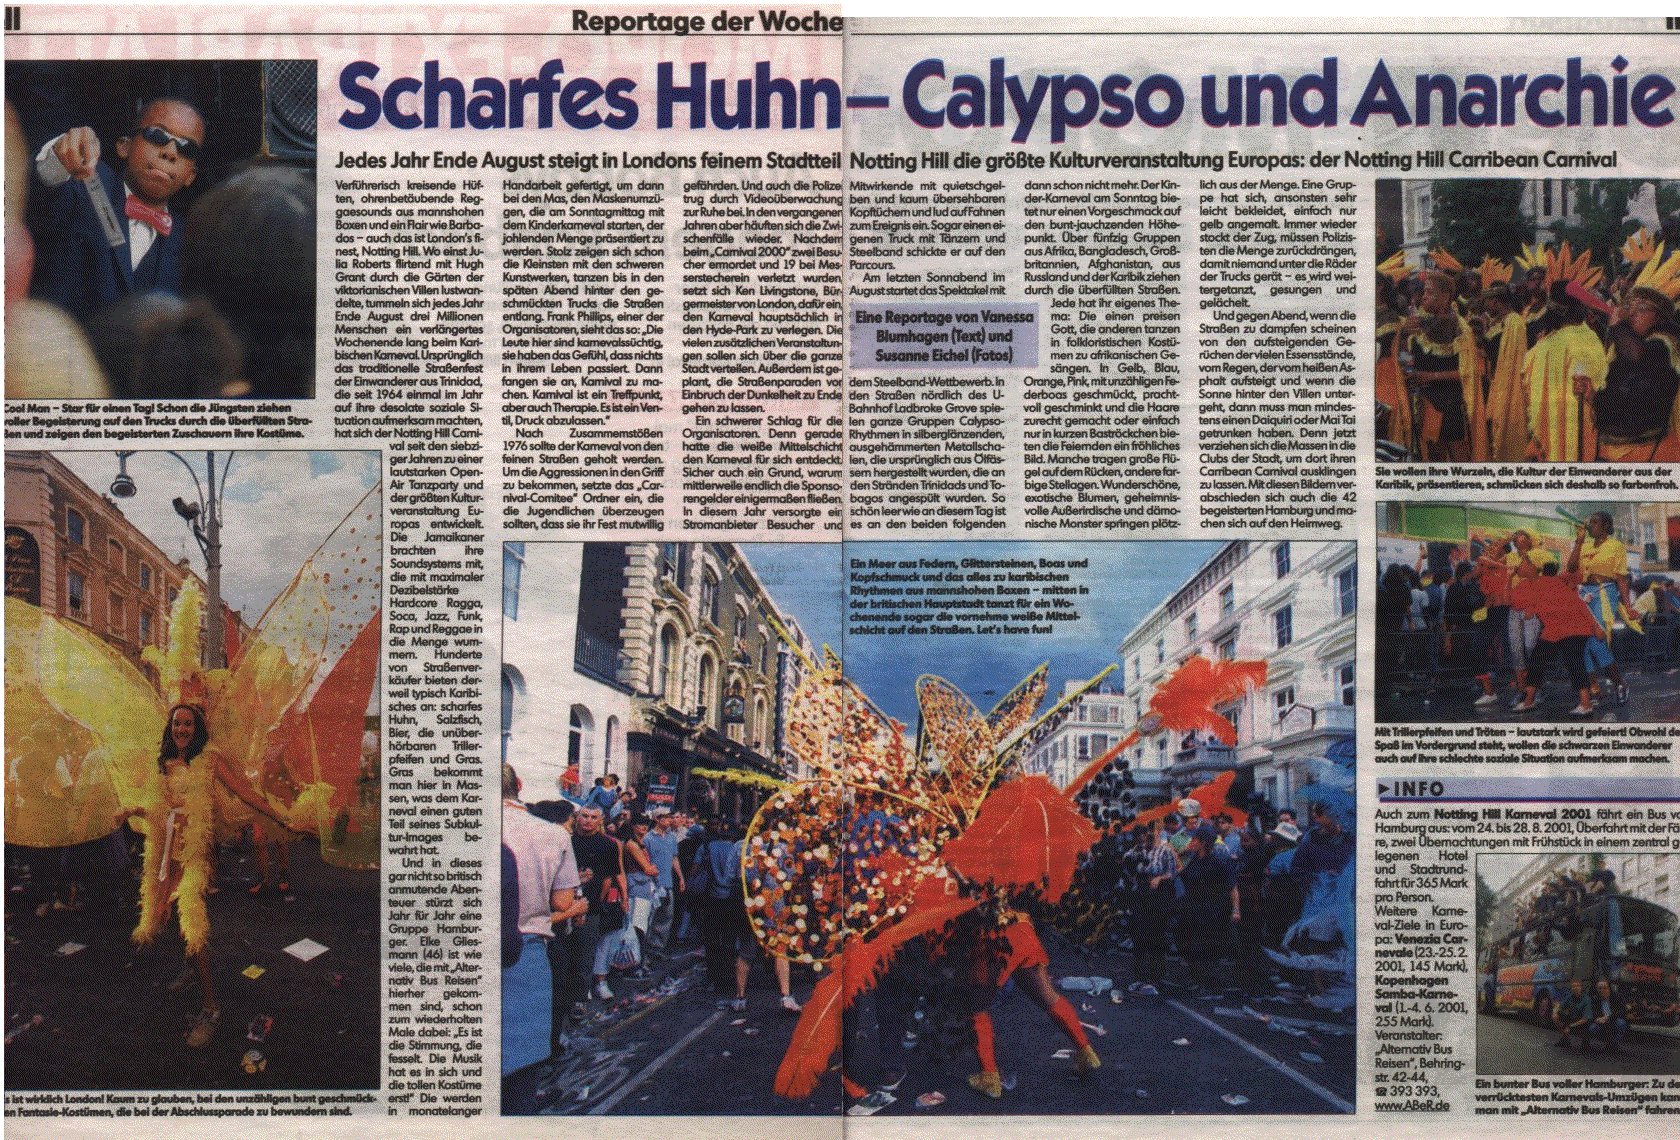 Hamburger Morgenpost Nr. 215 - 37 vom 14.9.2000,
MOPO-EXTRABLATT, Seiten II und III